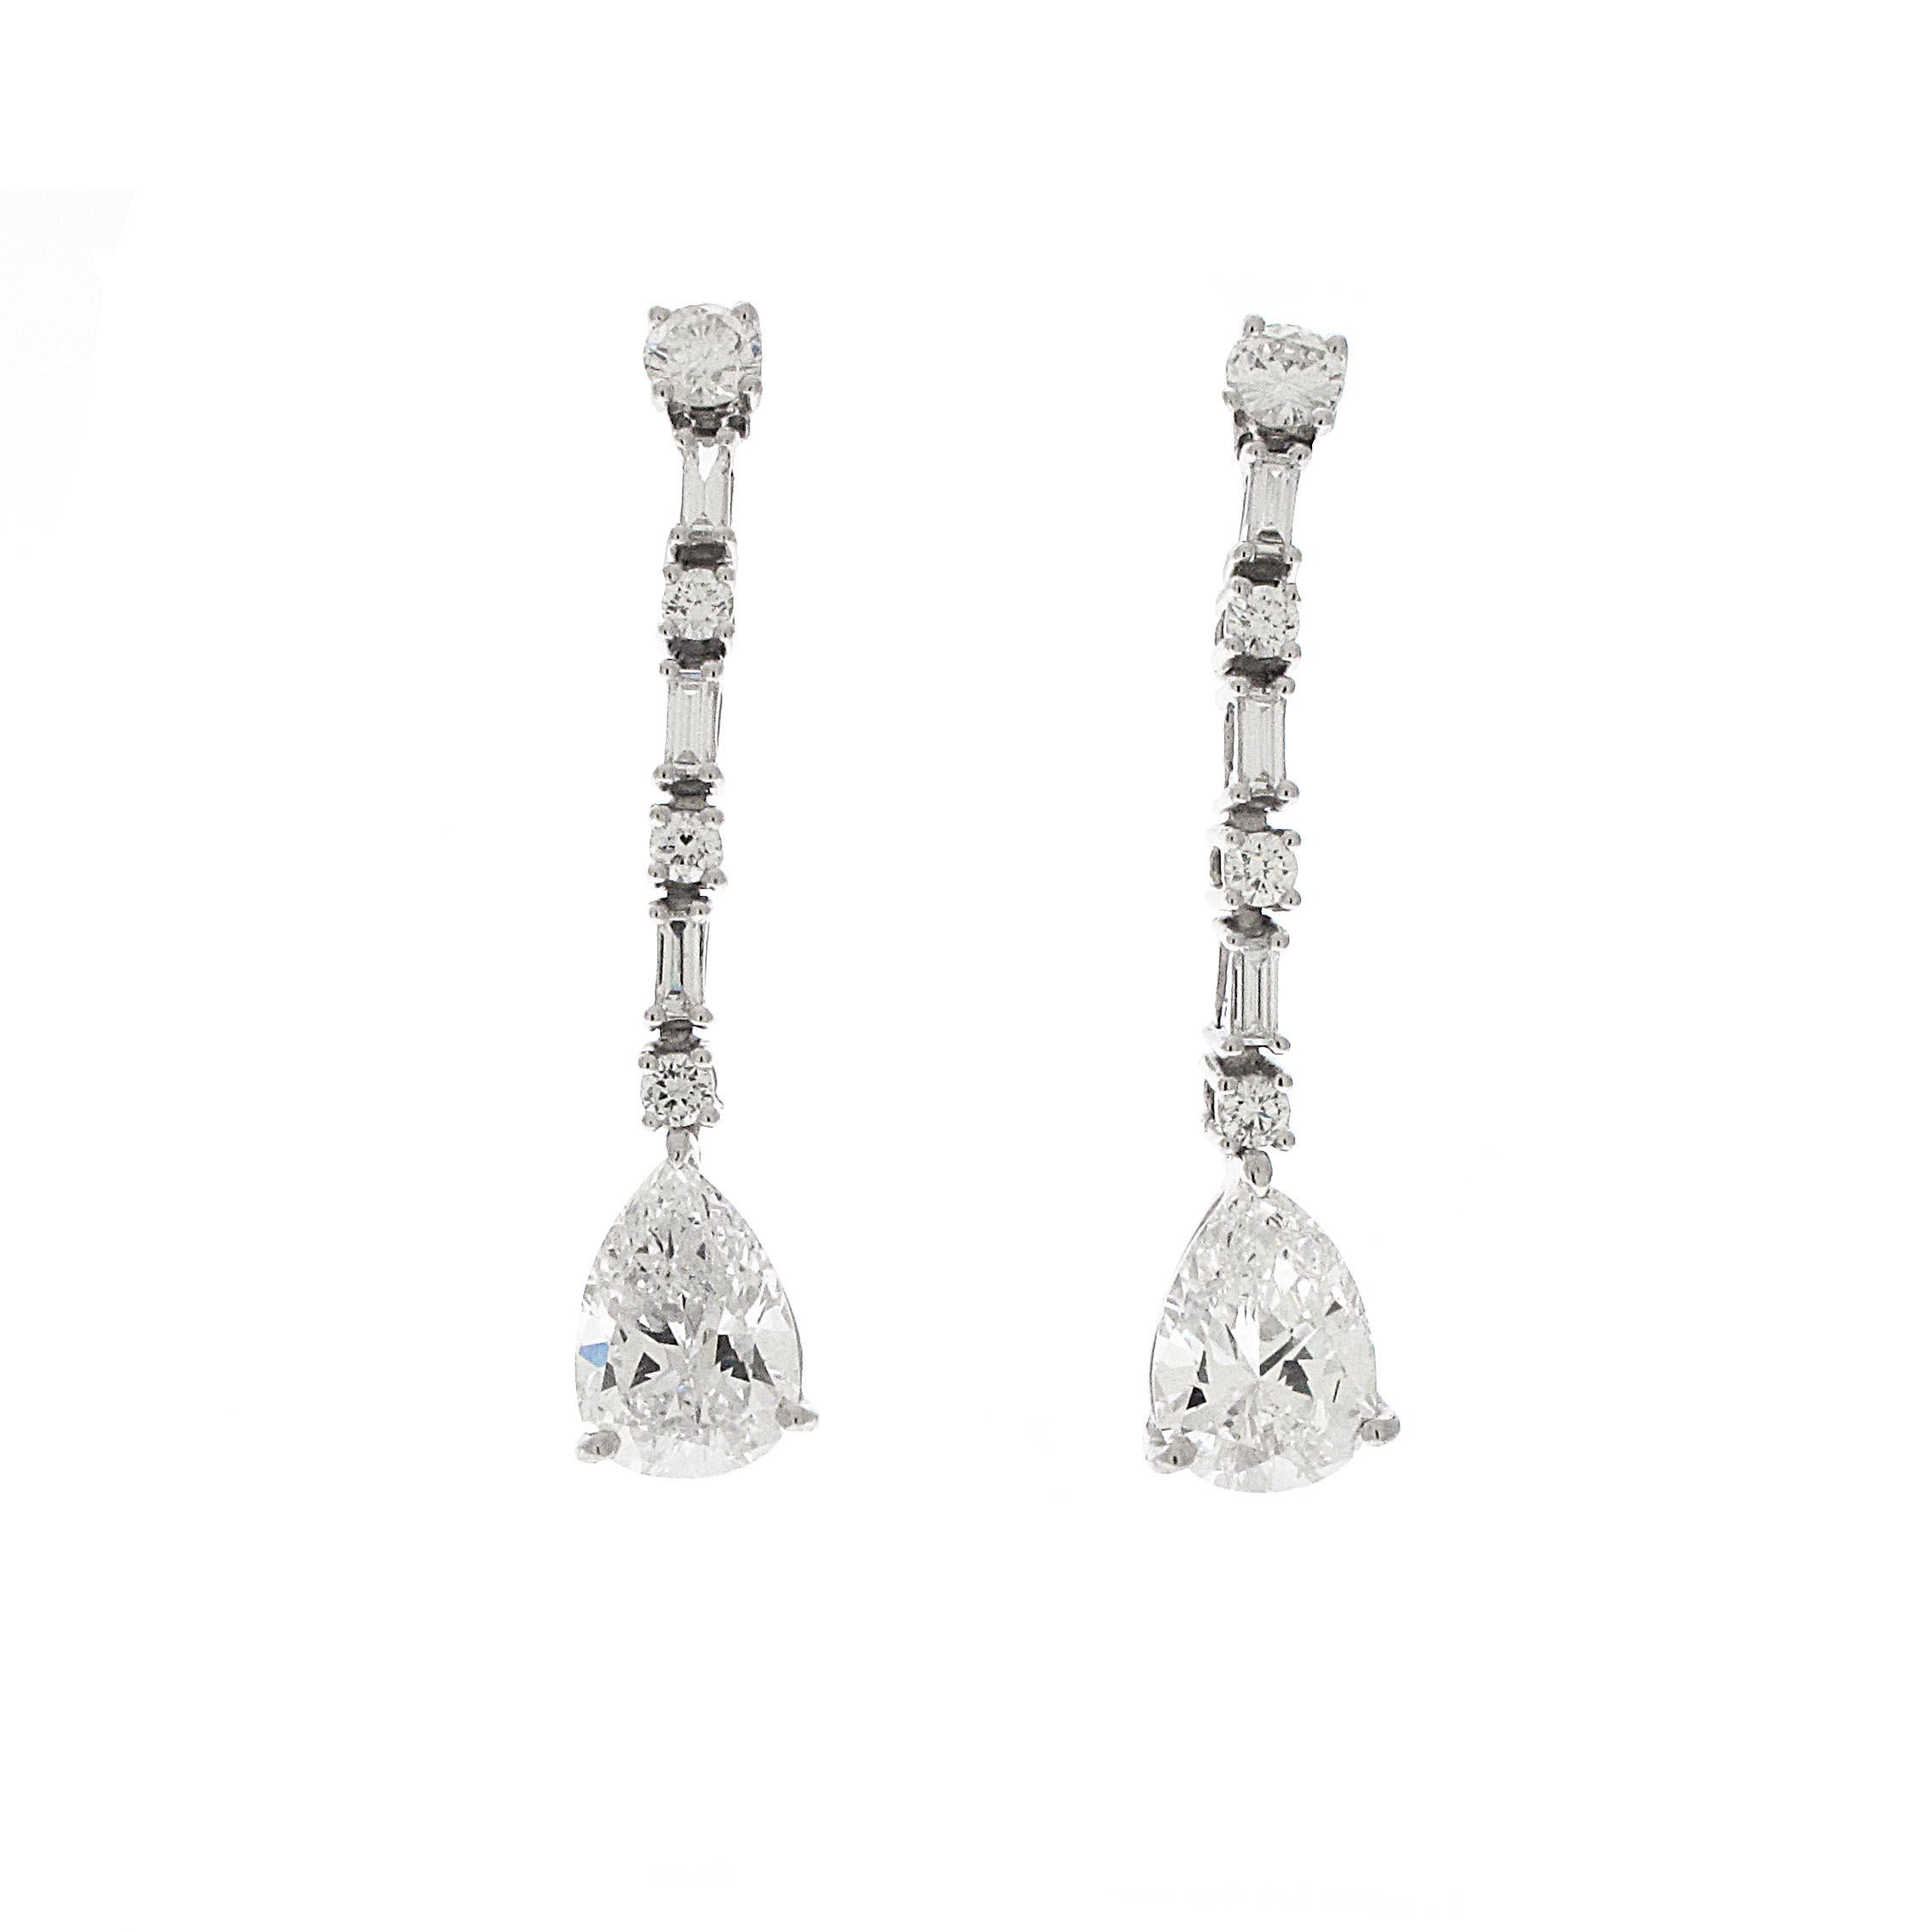 GIA Certified Matching Pear Shape Diamond Earring Drops, 1.44 and 1.37 each